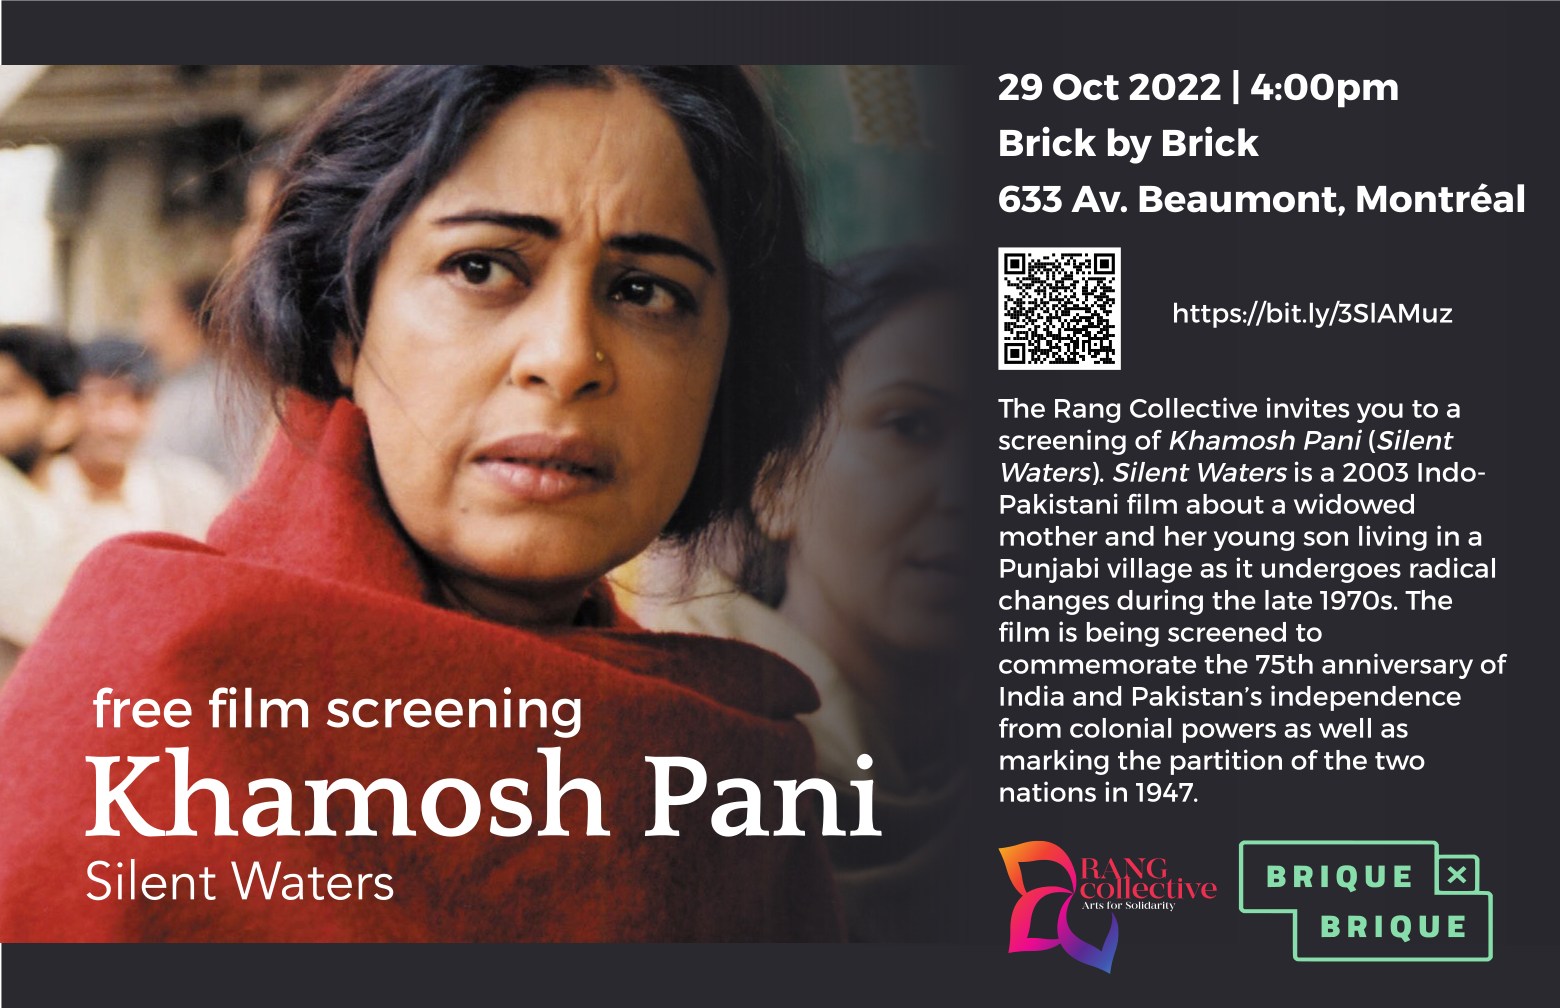 Poster for Khamosh Pani film screening at Brick by Brick